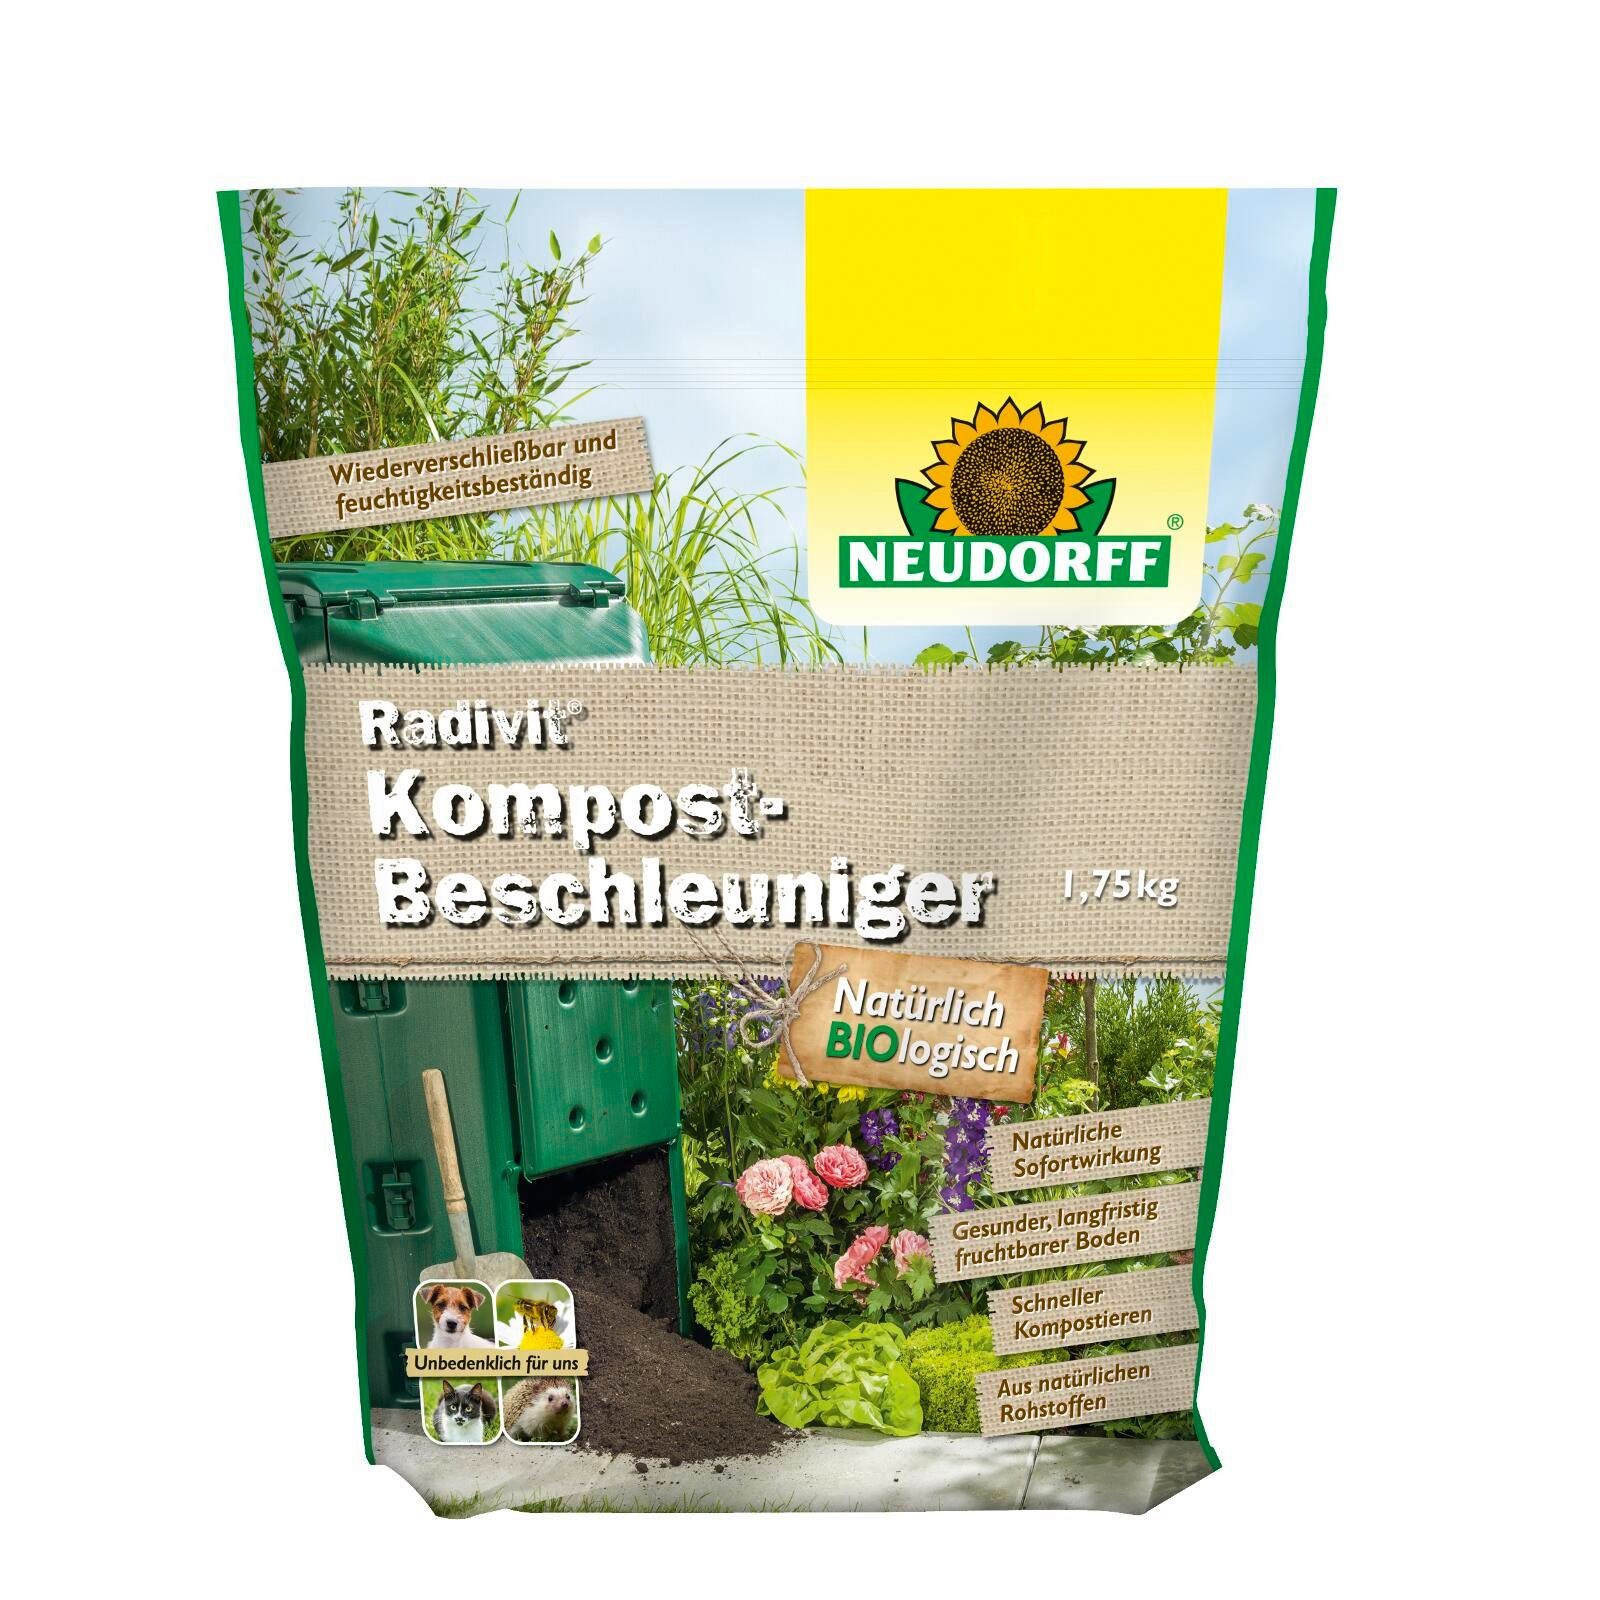 Neudorff Thermokomposter Neudorff Radivit Kompost-Beschleuniger kg 1,75 